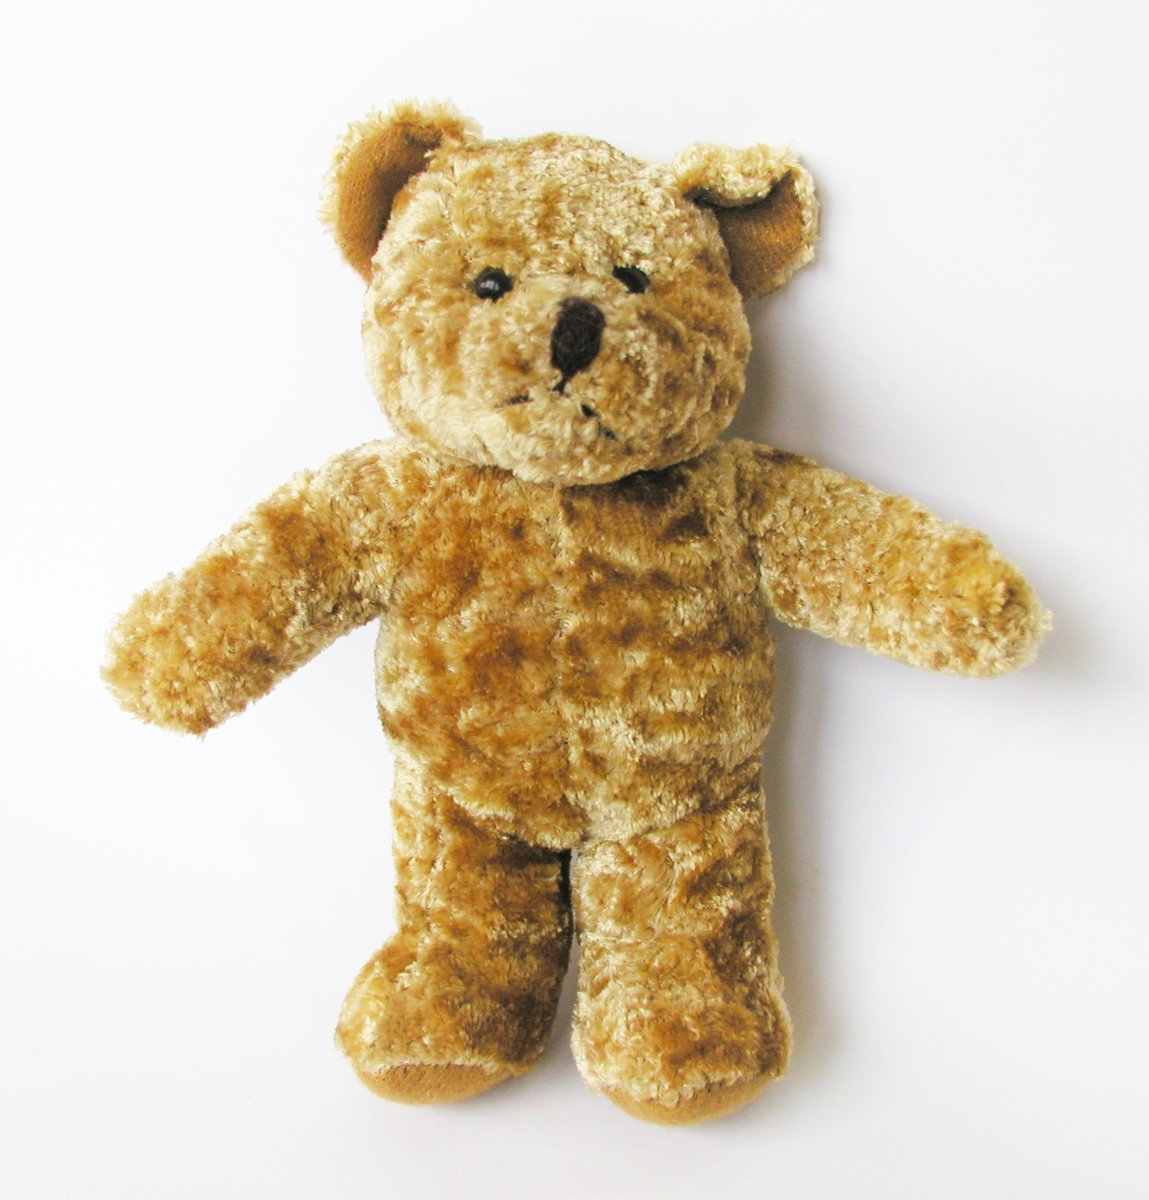 a teddy bear that has just fallen apart from it's body